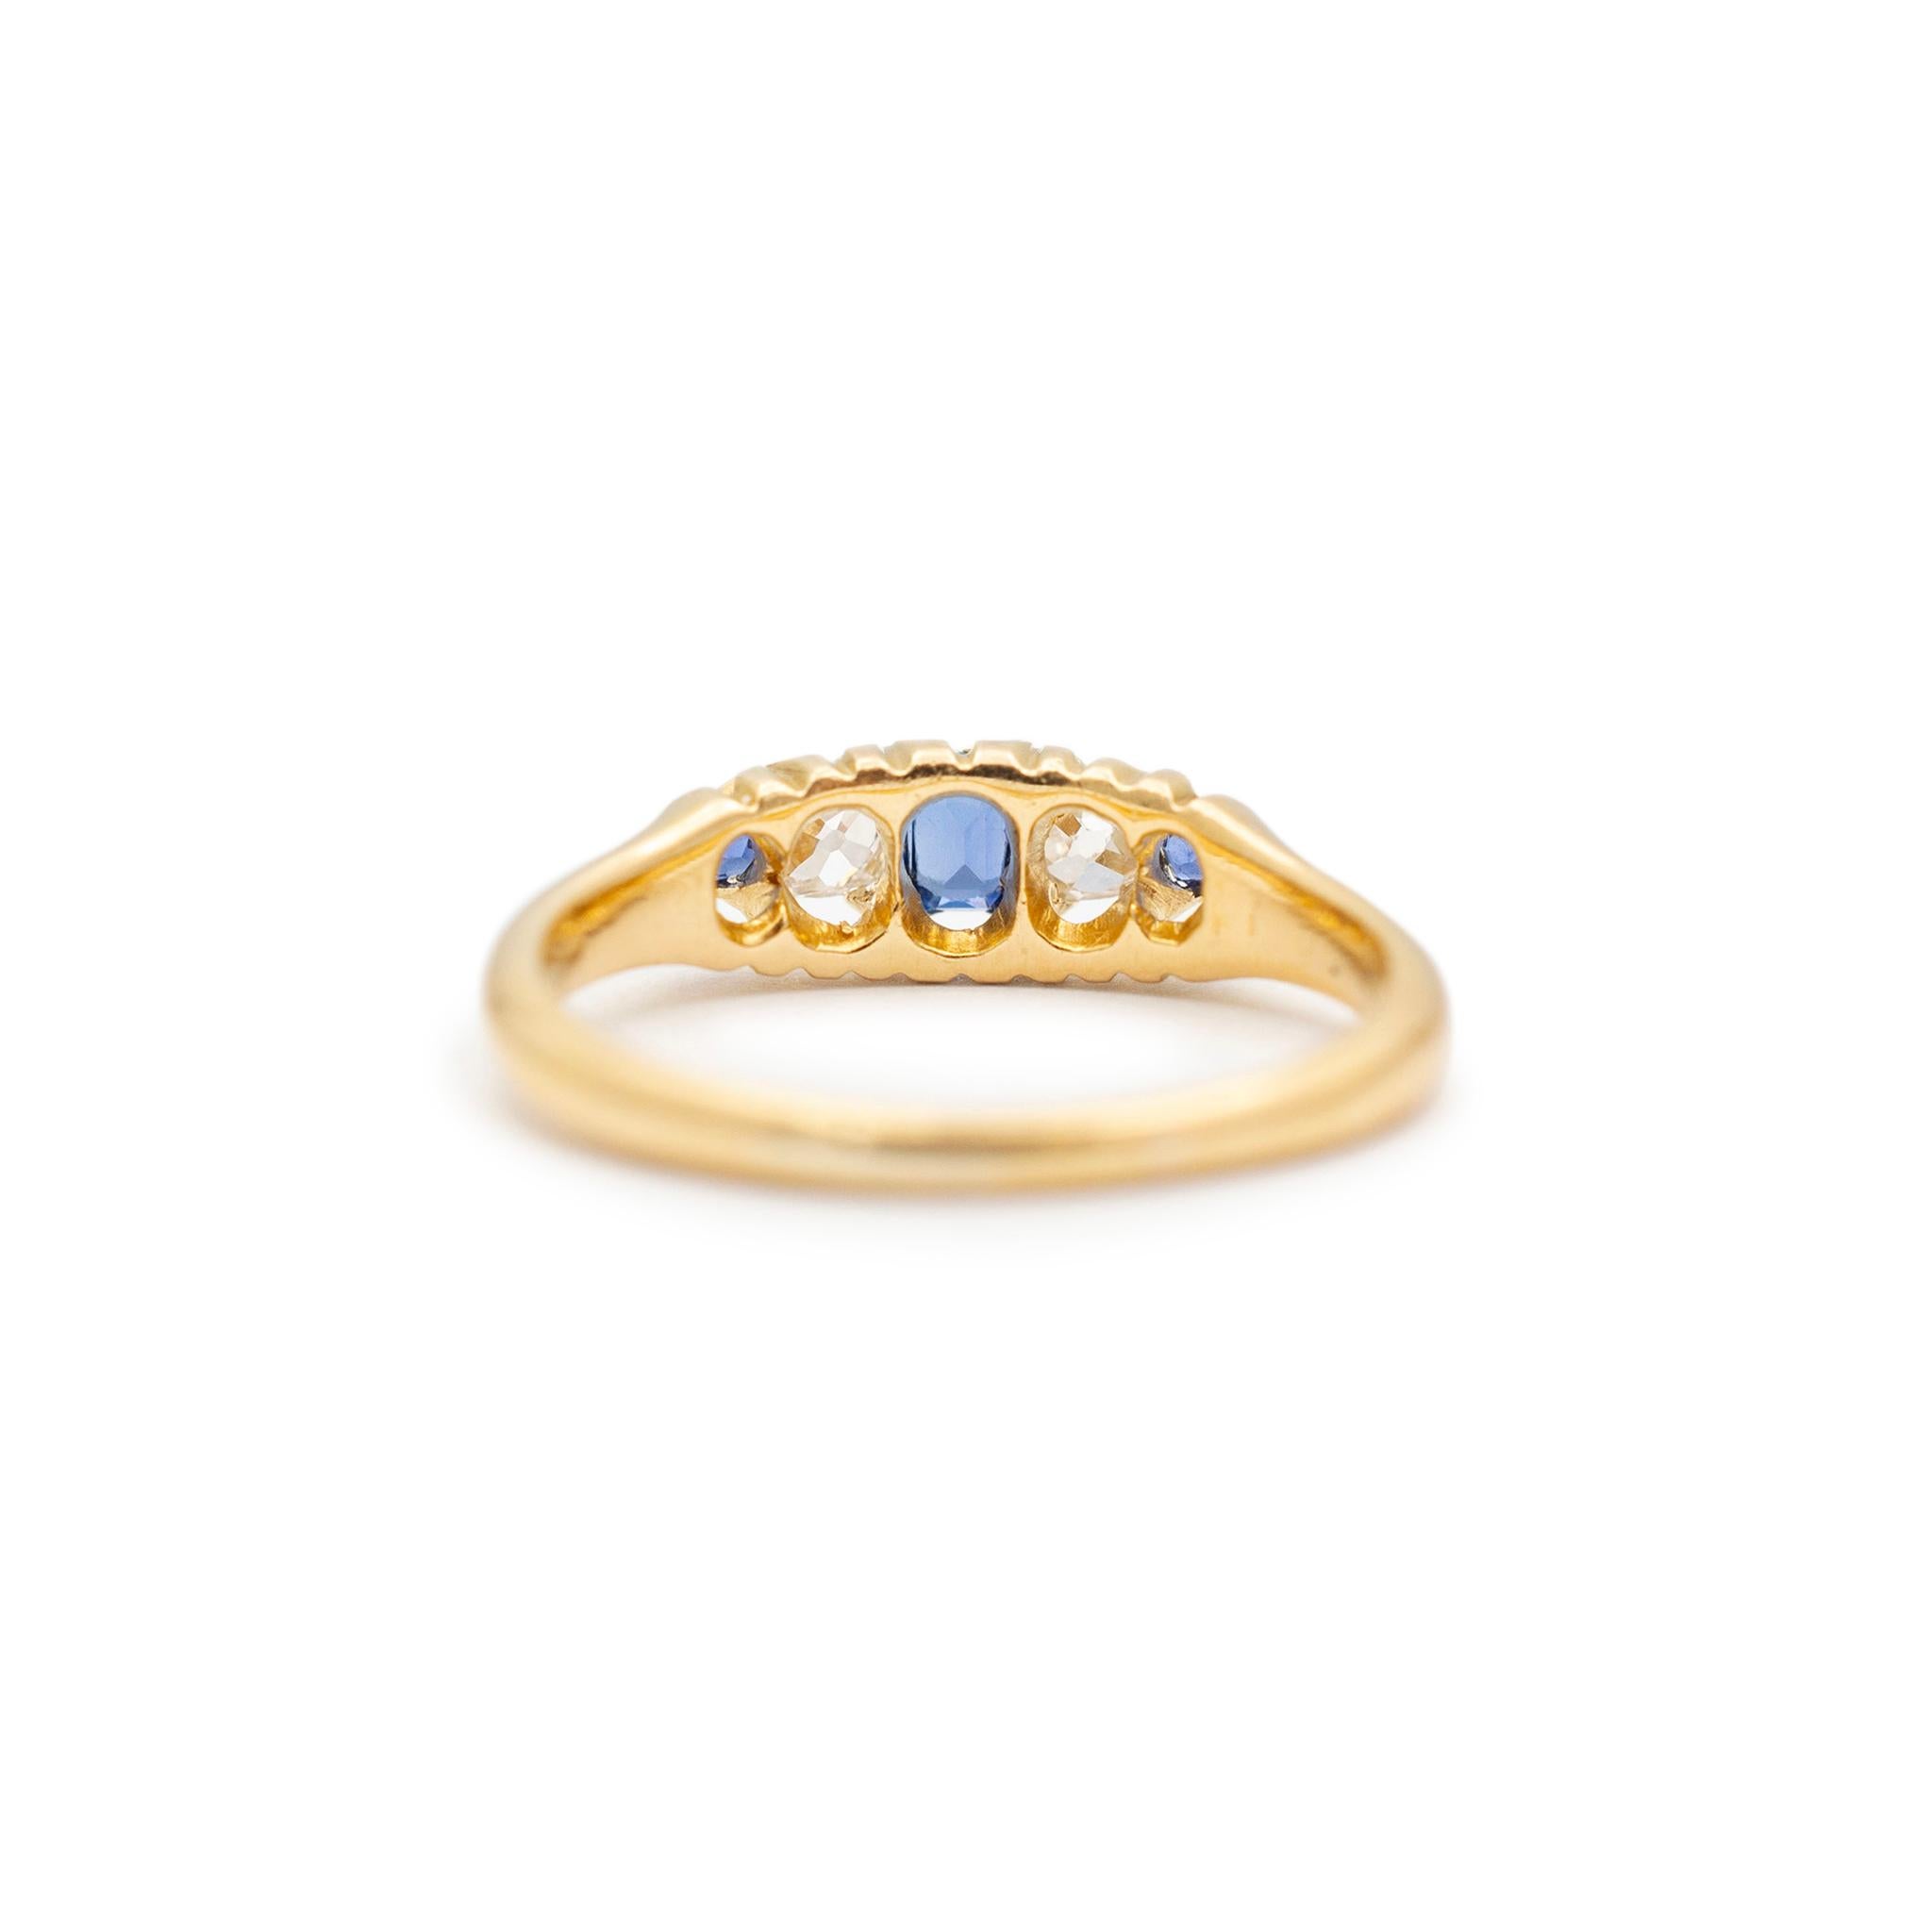 Women's Ladies Antique 18K Yellow Gold Old European Diamond Sapphire Cocktail Ring